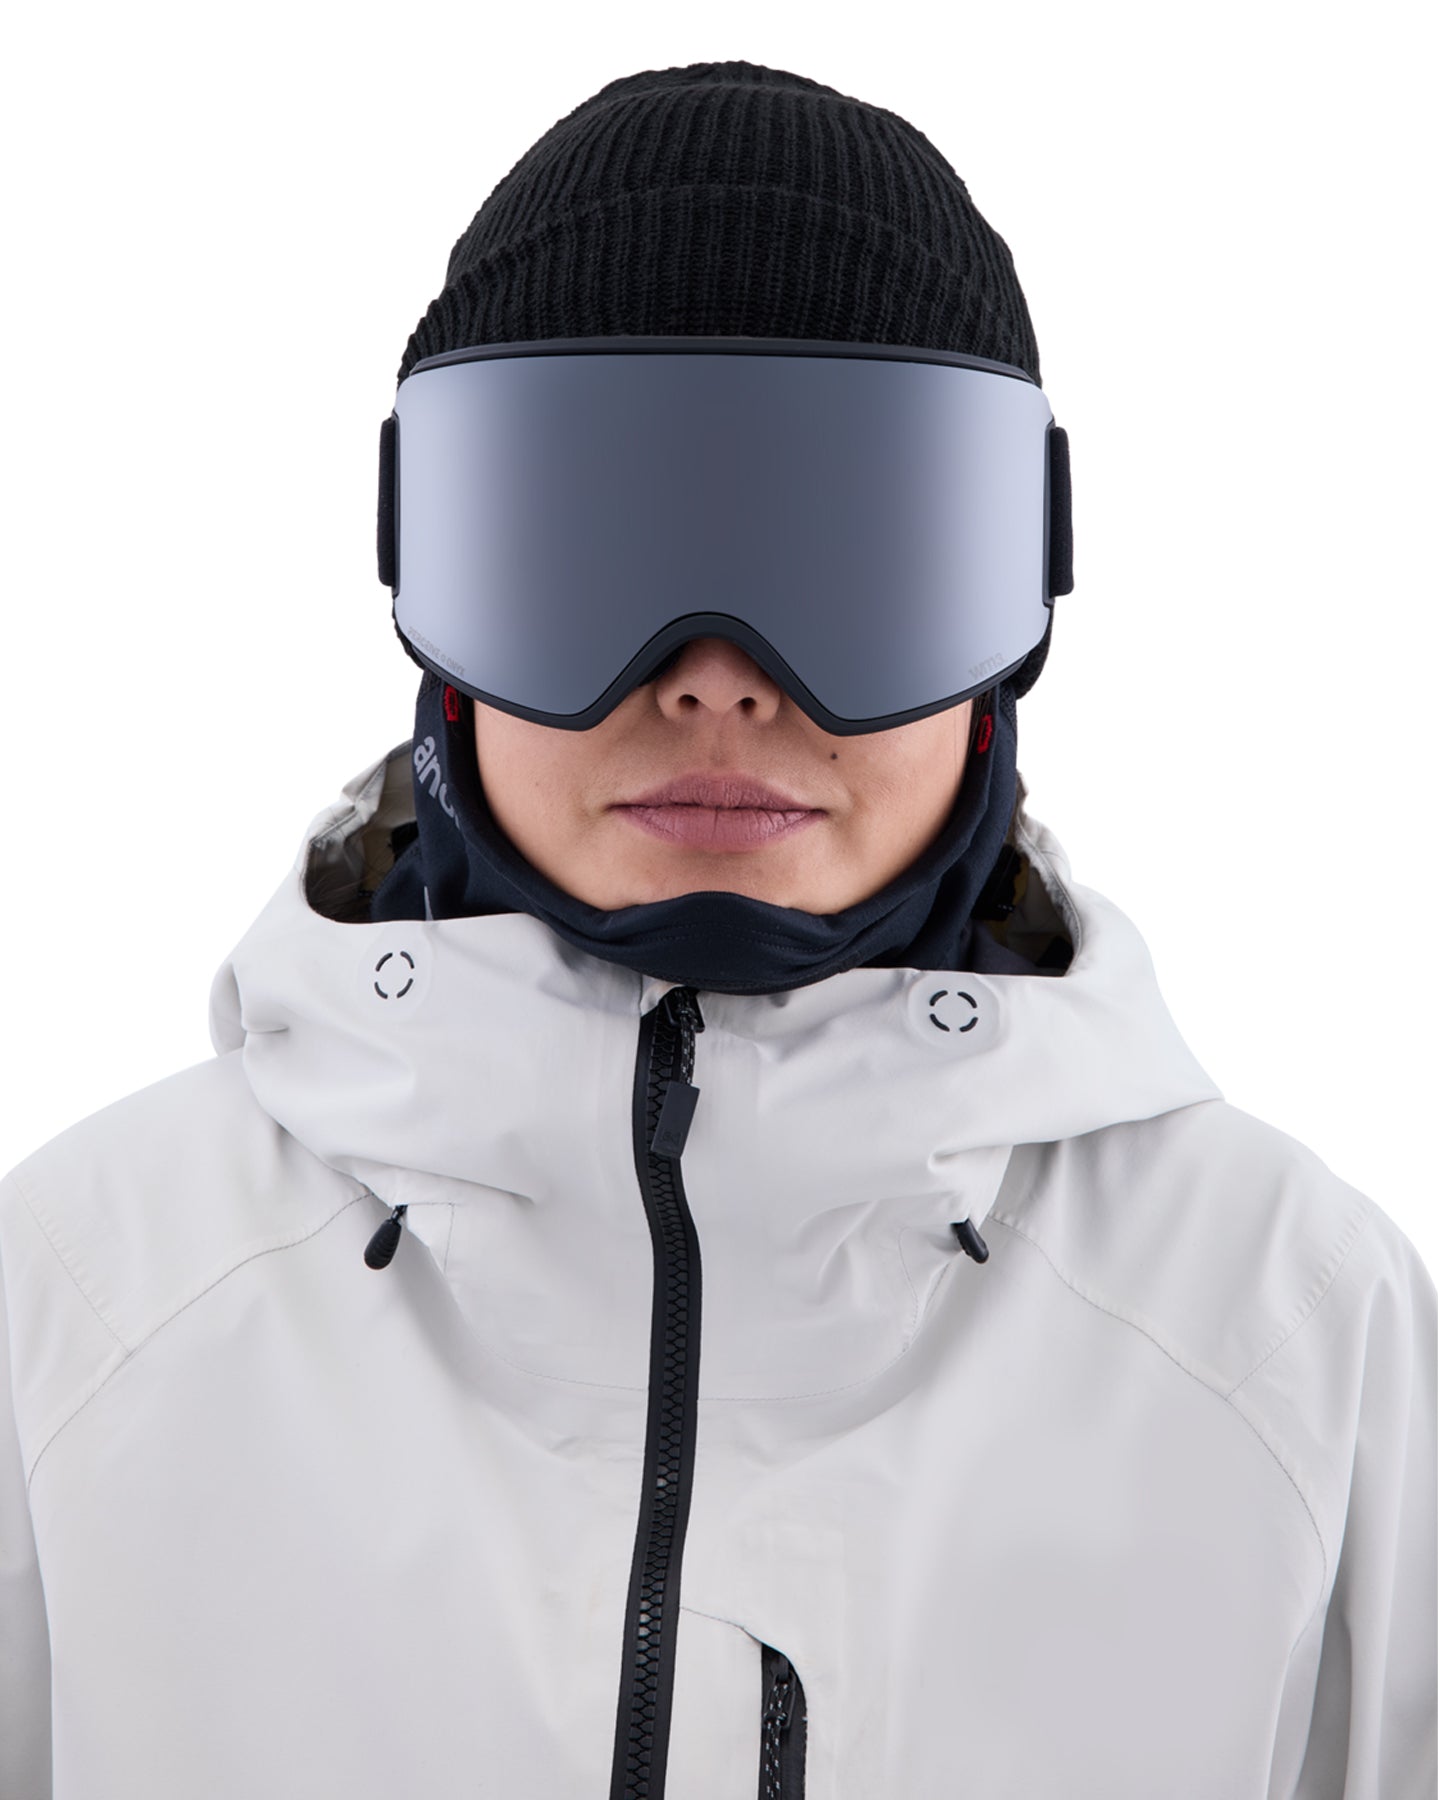 Anon WM3 Low Bridge Fit Snow Goggles + Bonus Lens + MFI - Smoke / Perceive Sunny Onyx Women's Snow Goggles - Trojan Wake Ski Snow